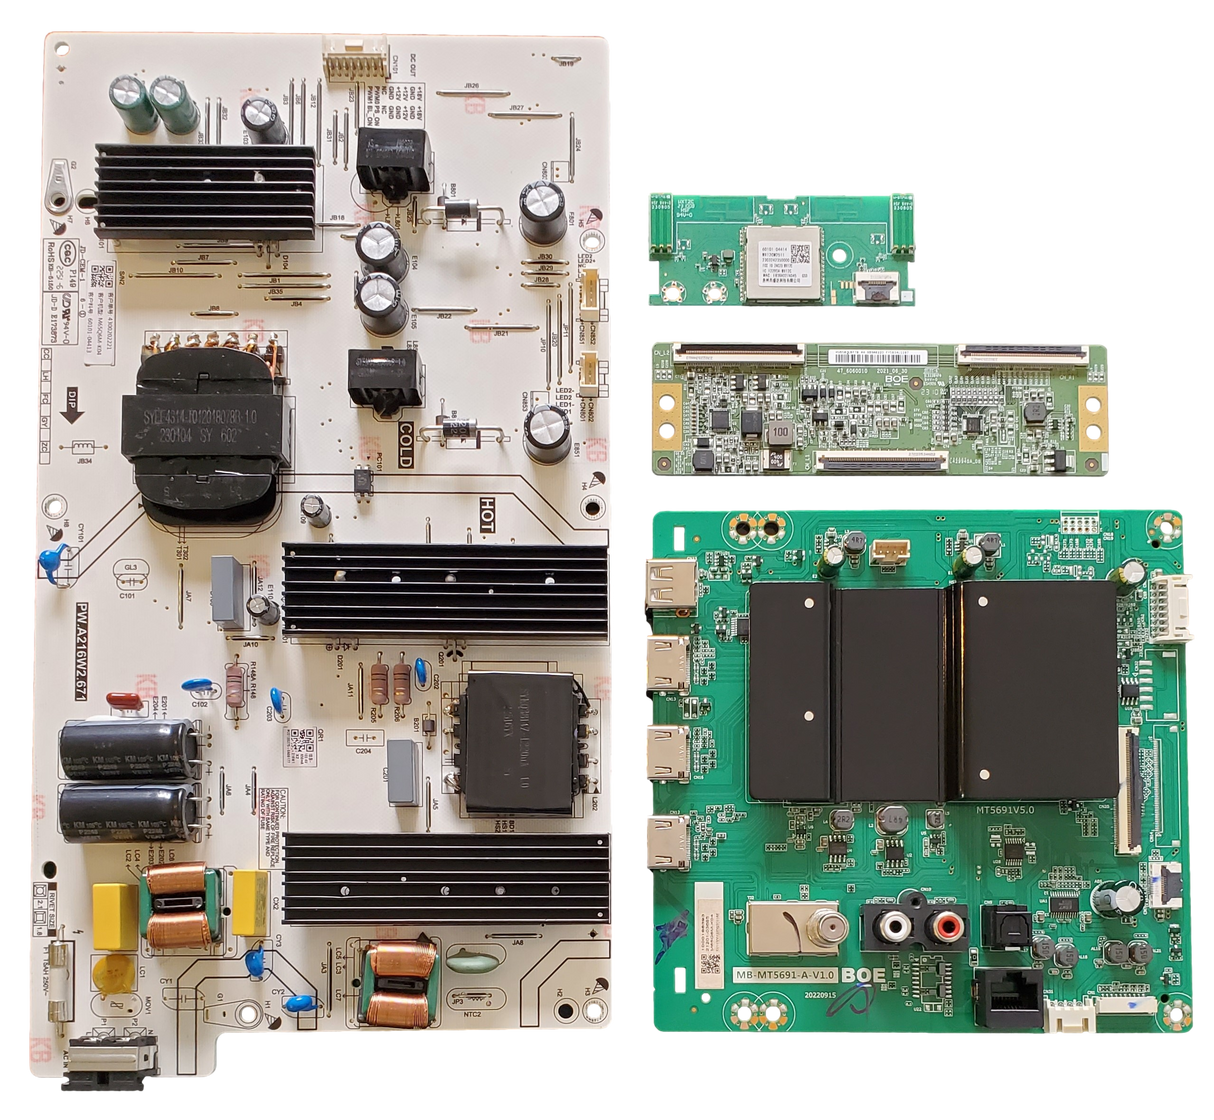 M65Q6M-K04 Vizio TV Repair Parts Kit, 21201-03685 Main Board, 60101-04413 Power Supply, 44-9890022O T-Con, 60101-04414 Wifi, M65Q6M-K04